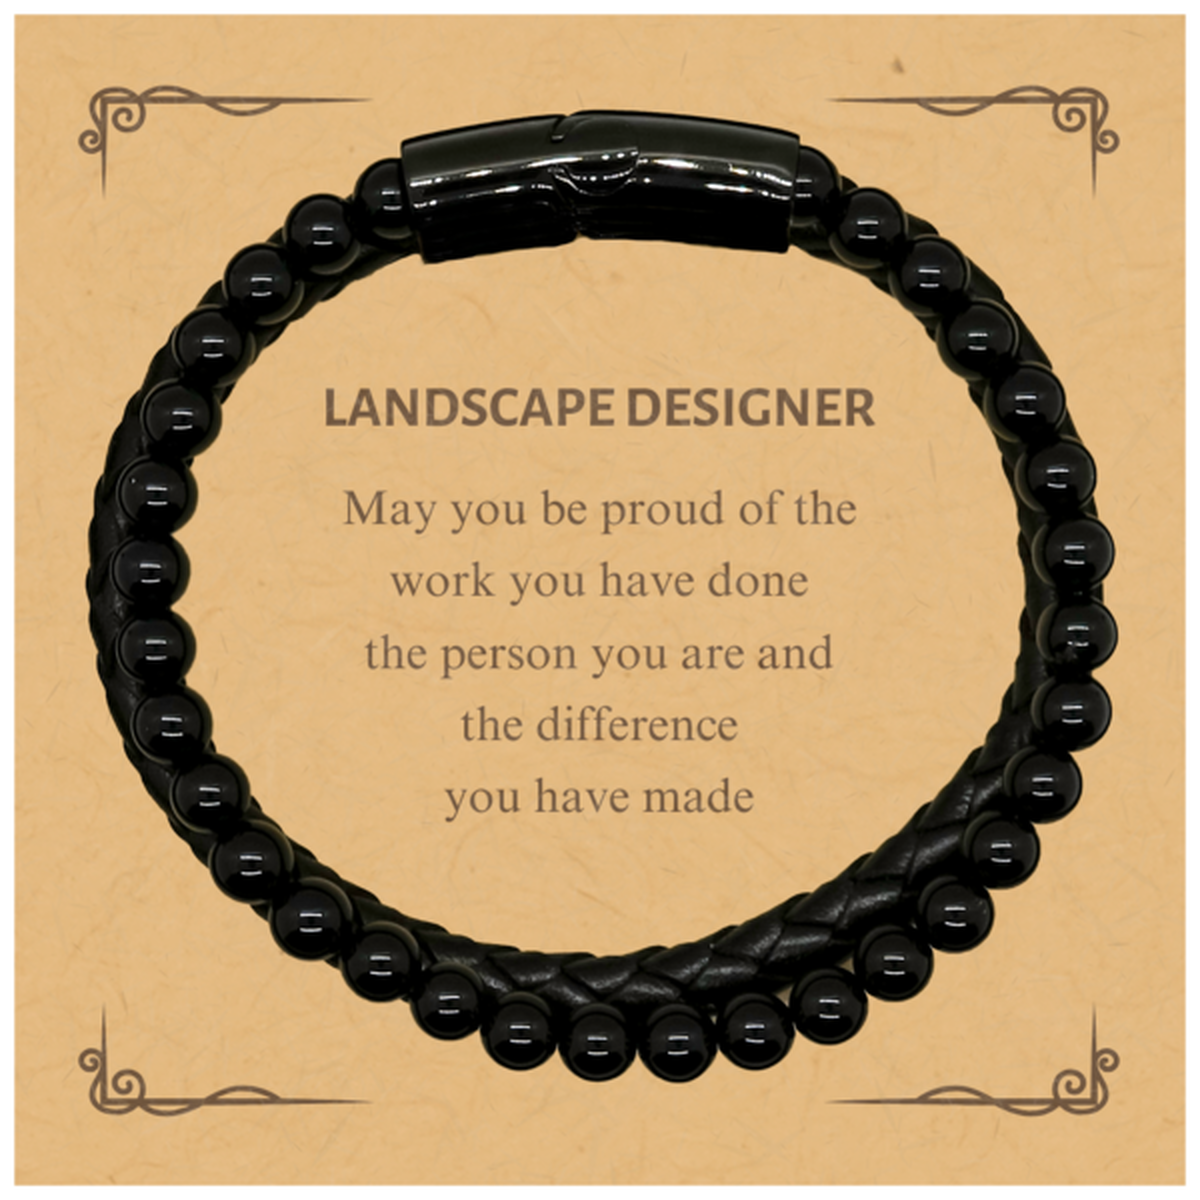 Landscape Designer May you be proud of the work you have done, Retirement Landscape Designer Stone Leather Bracelets for Colleague Appreciation Gifts Amazing for Landscape Designer